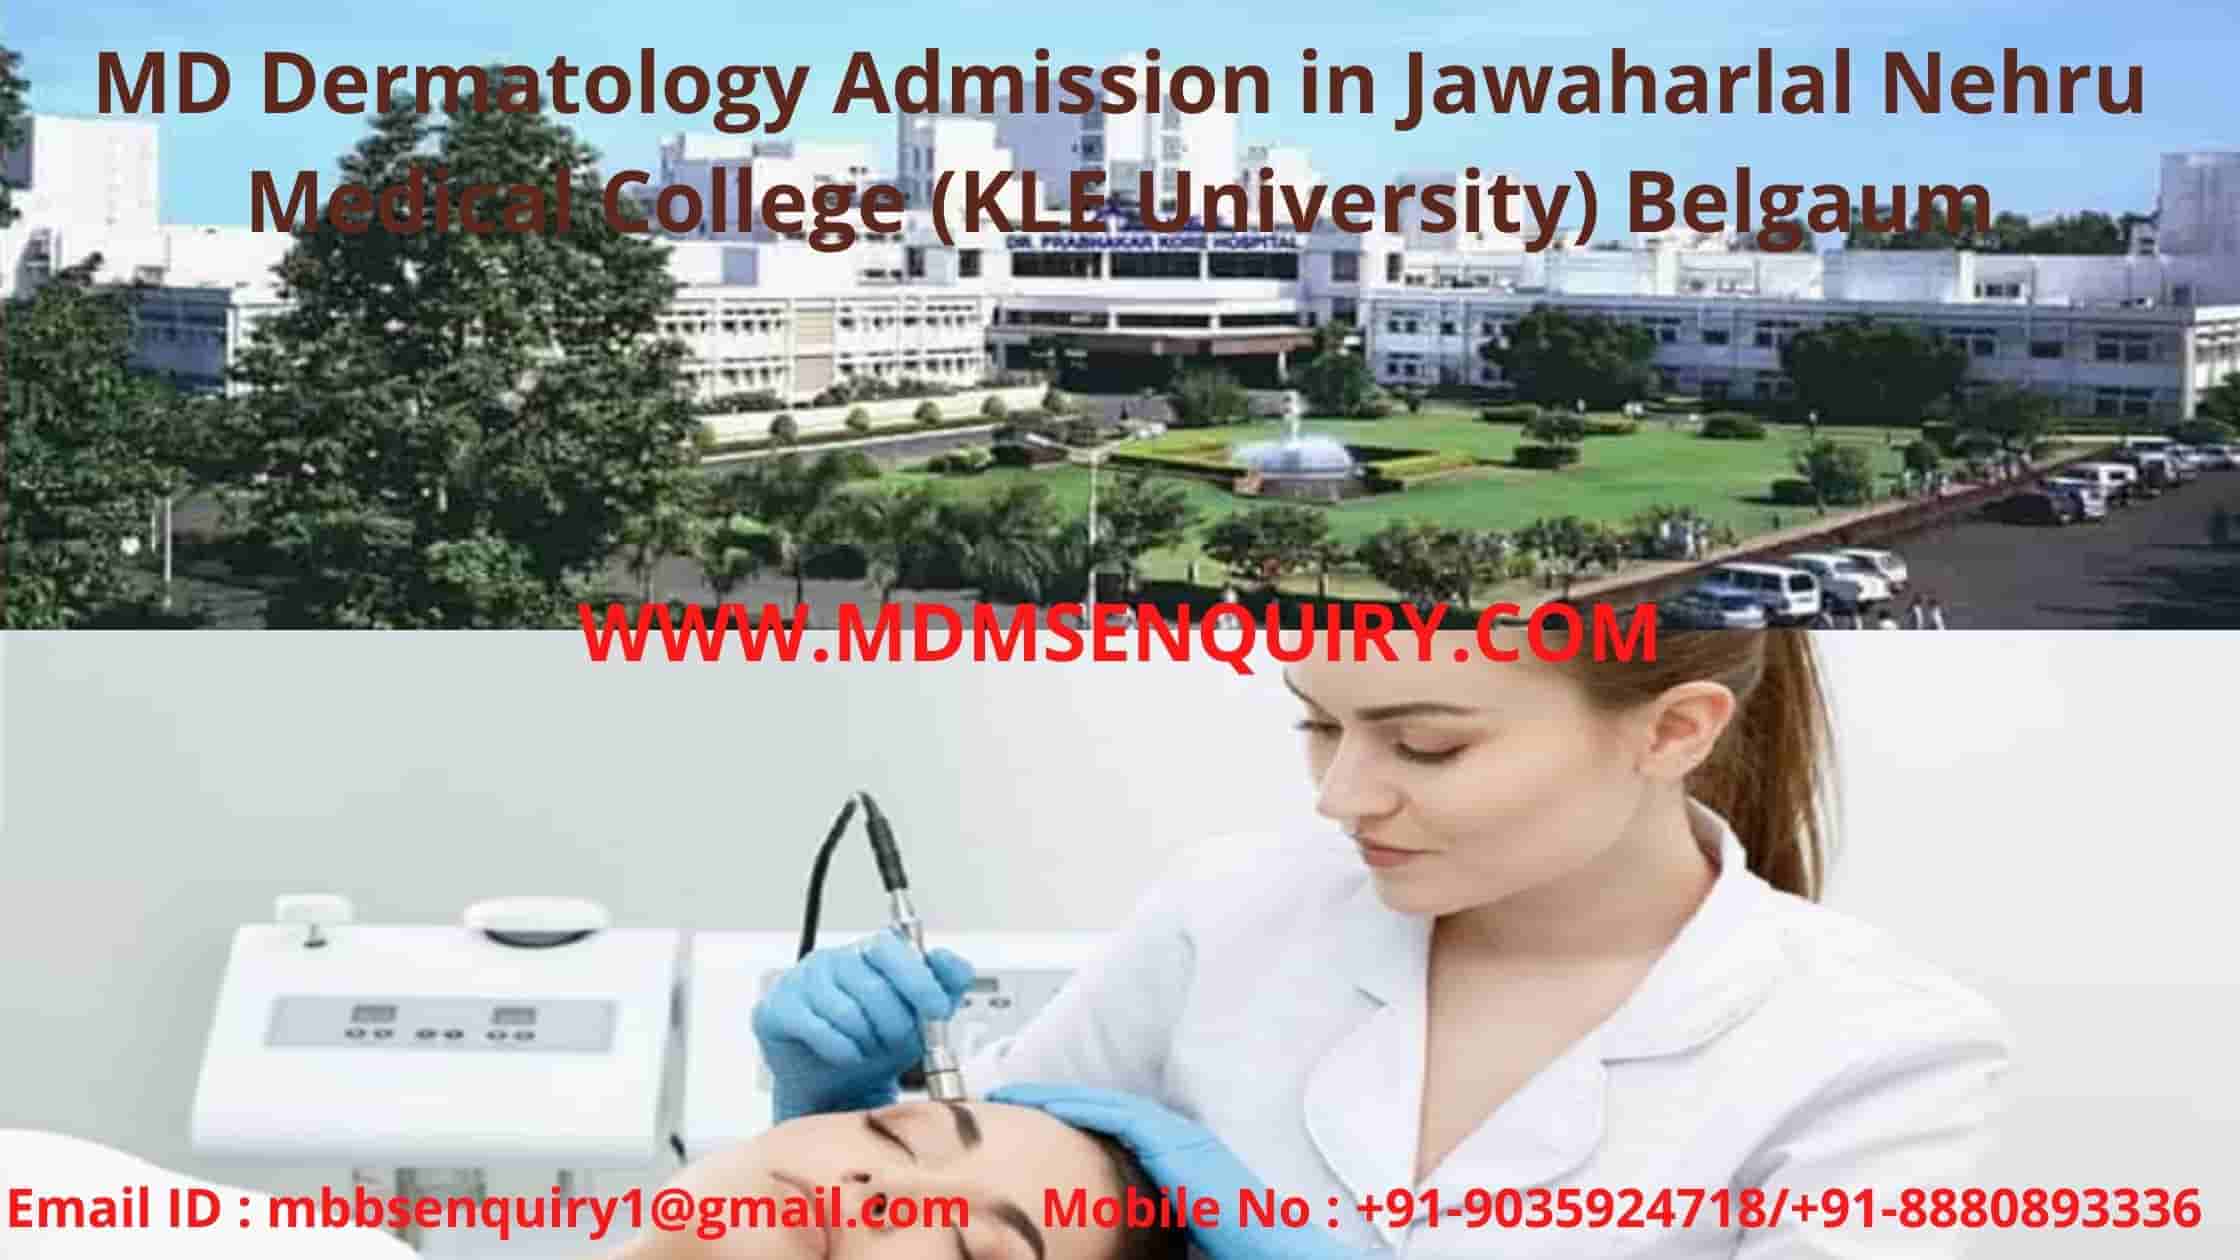 MD Dermatology admission in Jawaharlal Nehru Medical College Belgaum